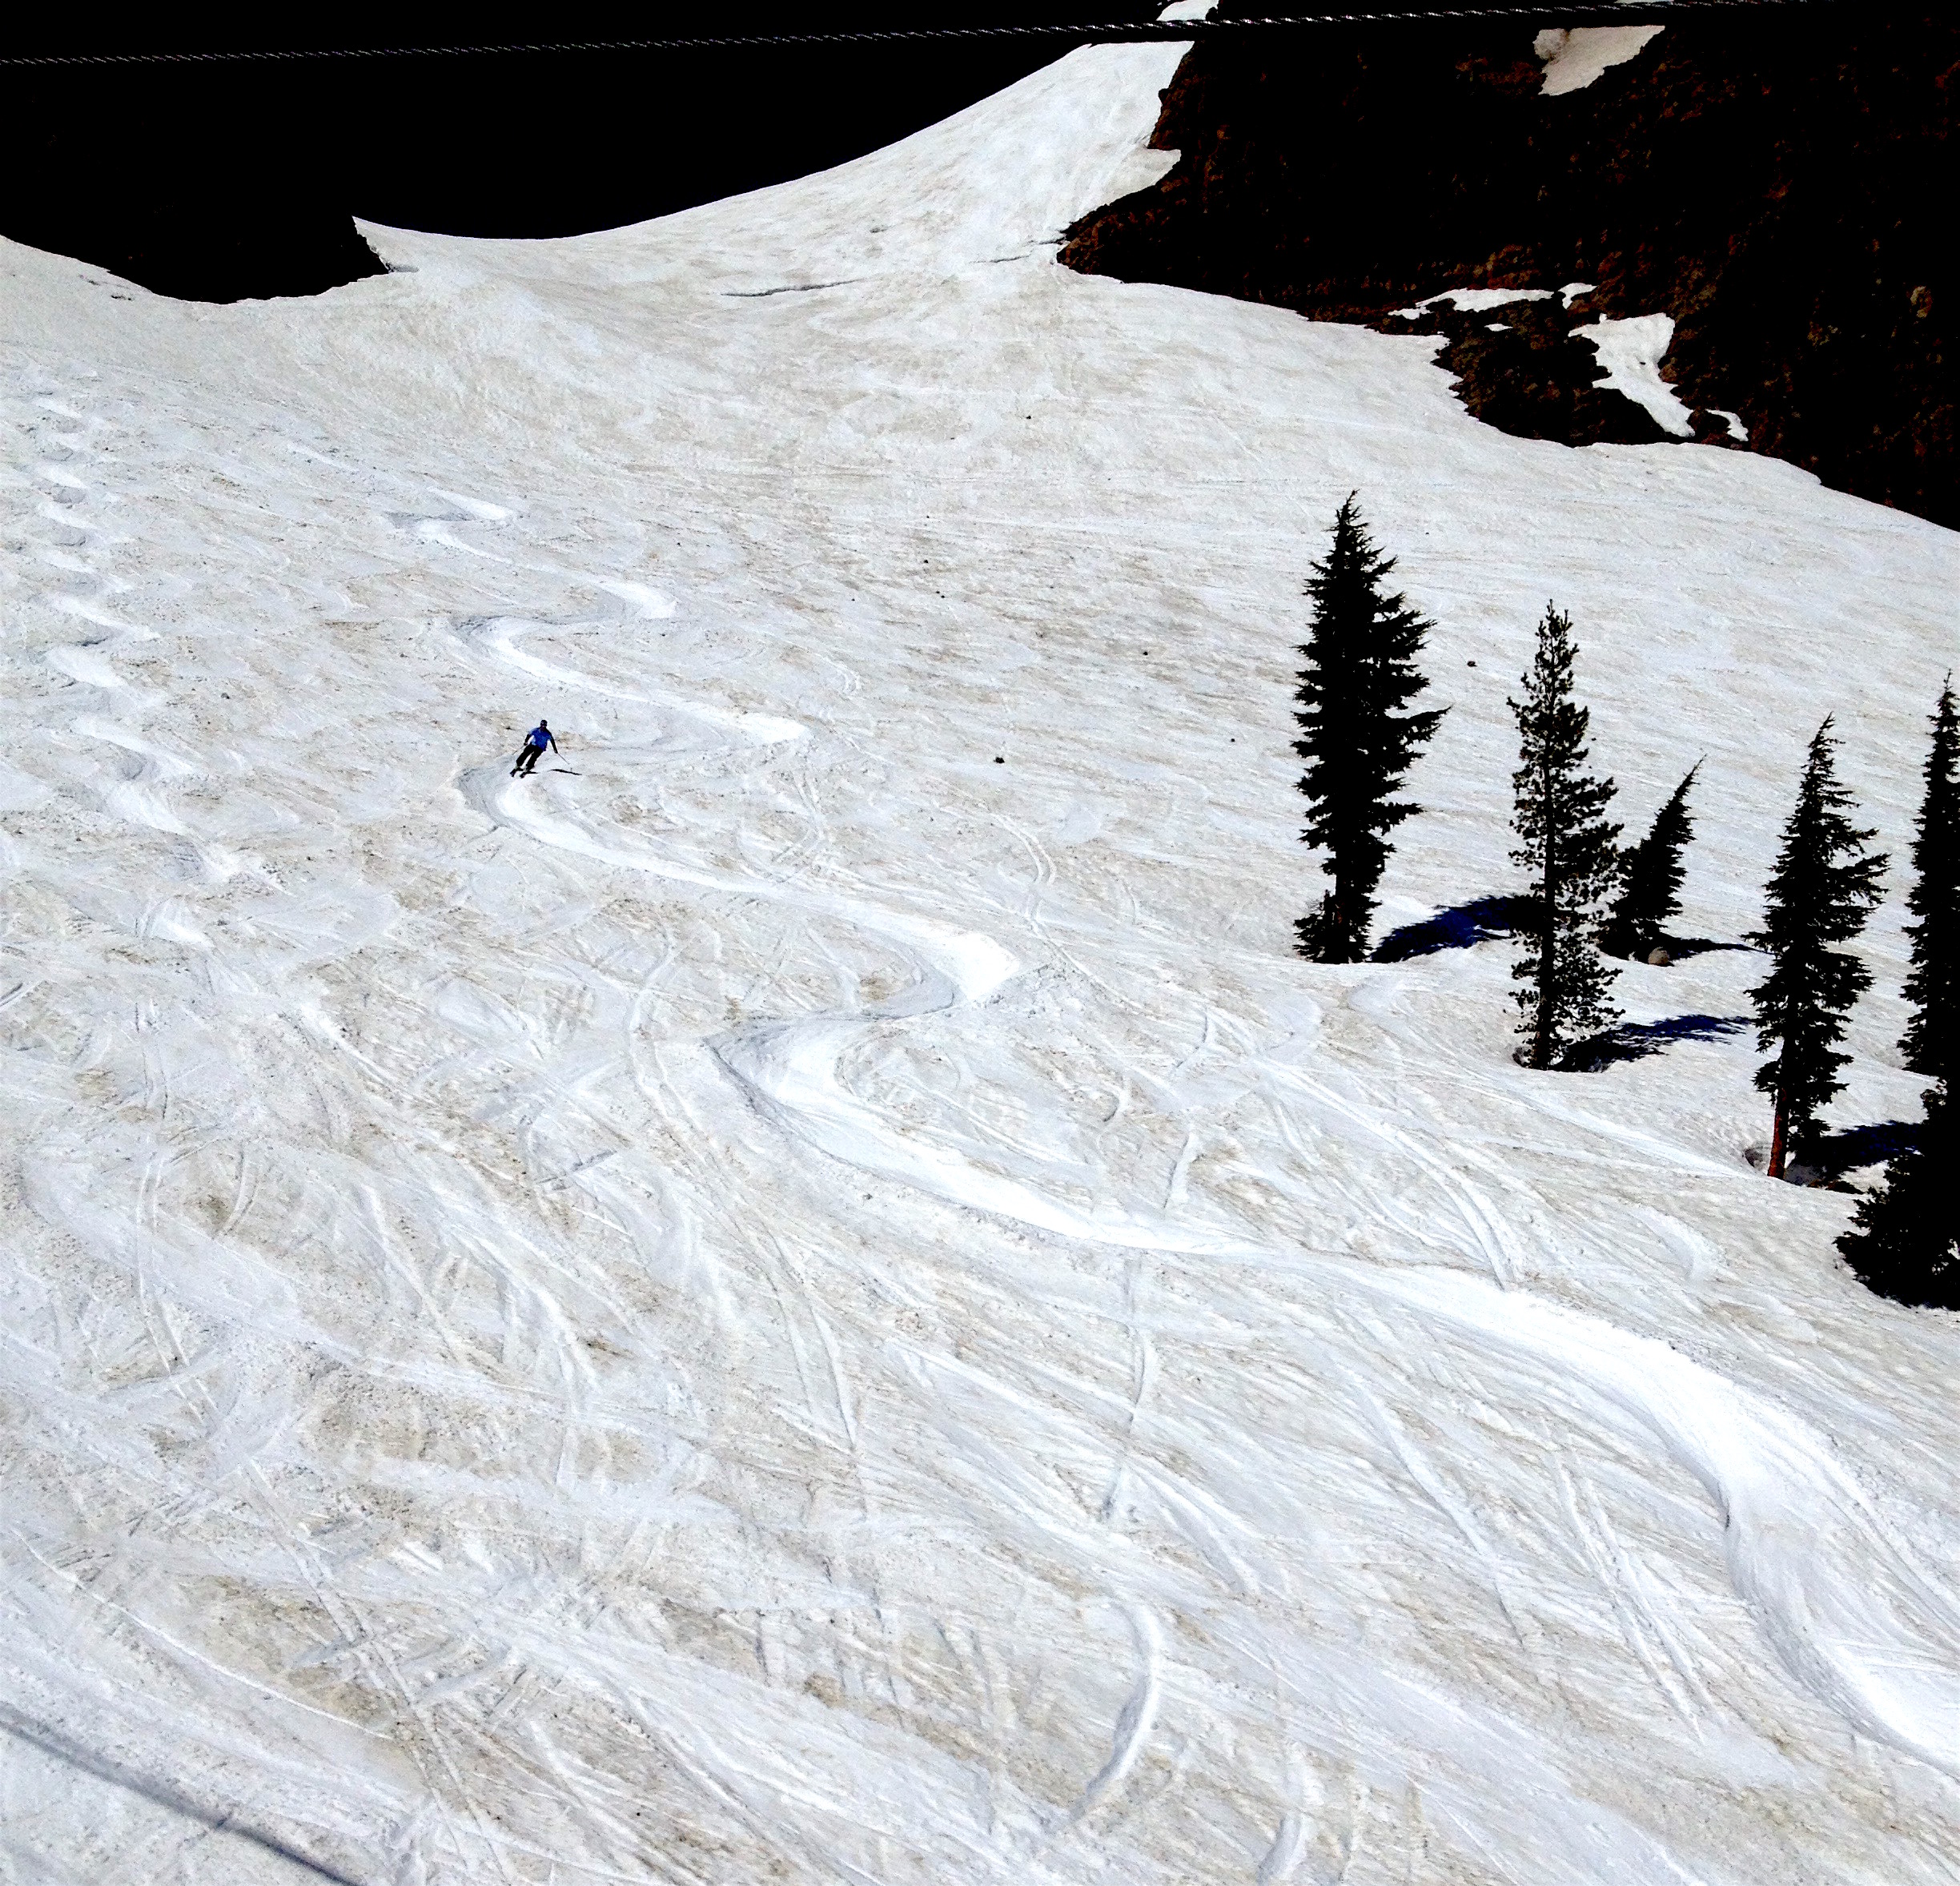 Banked slalom in Shirley yesterday. photo: snowbrains